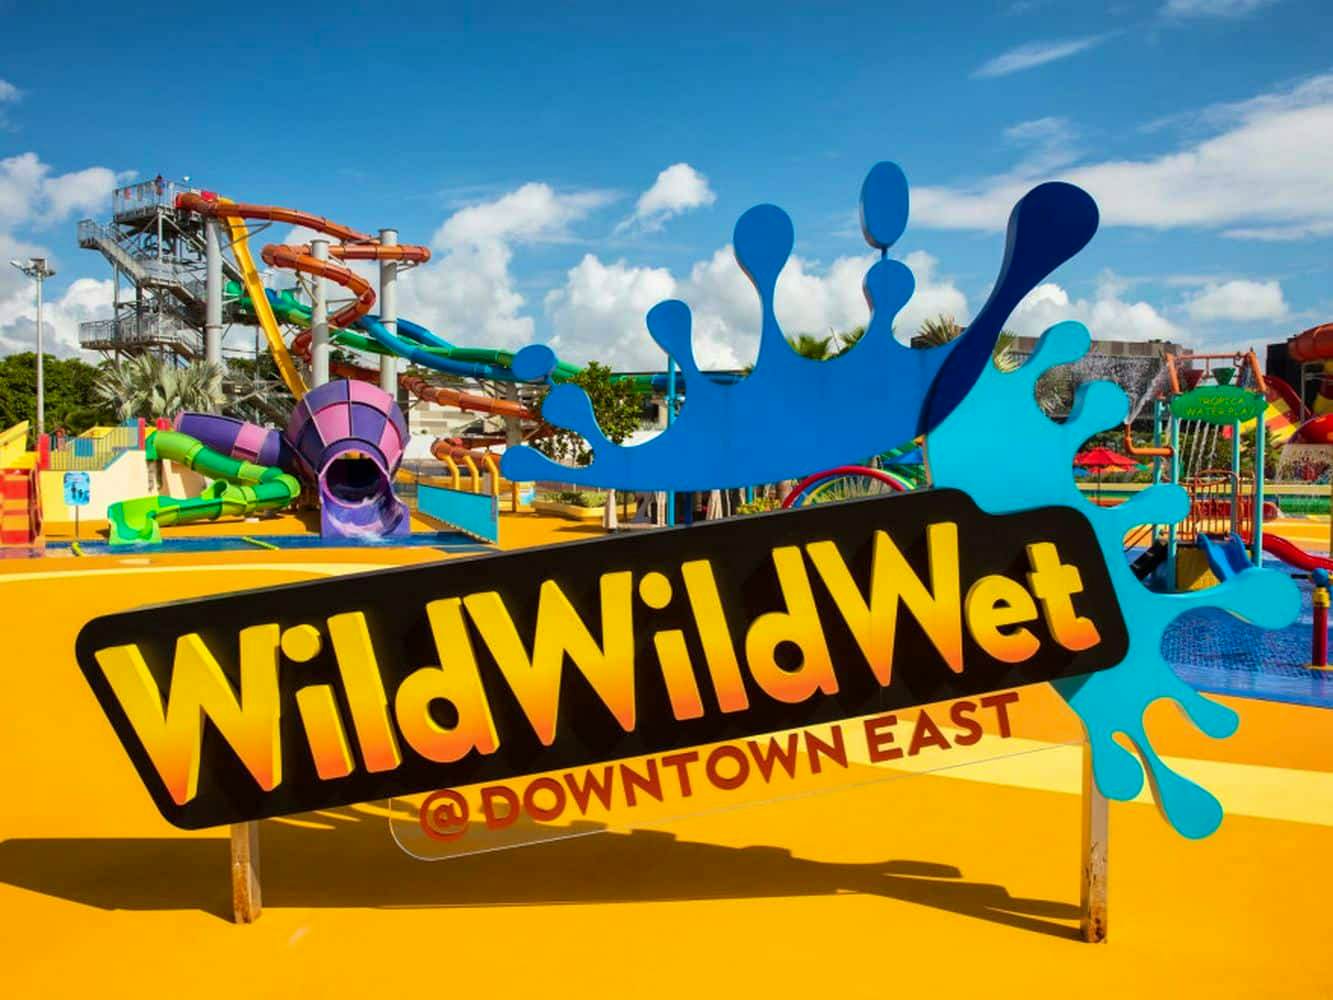 Wild Wild Wet Admission Ticket Downtown East [ Operational Days -Wed,Thu,Fri,Sat,Sun,Mon]